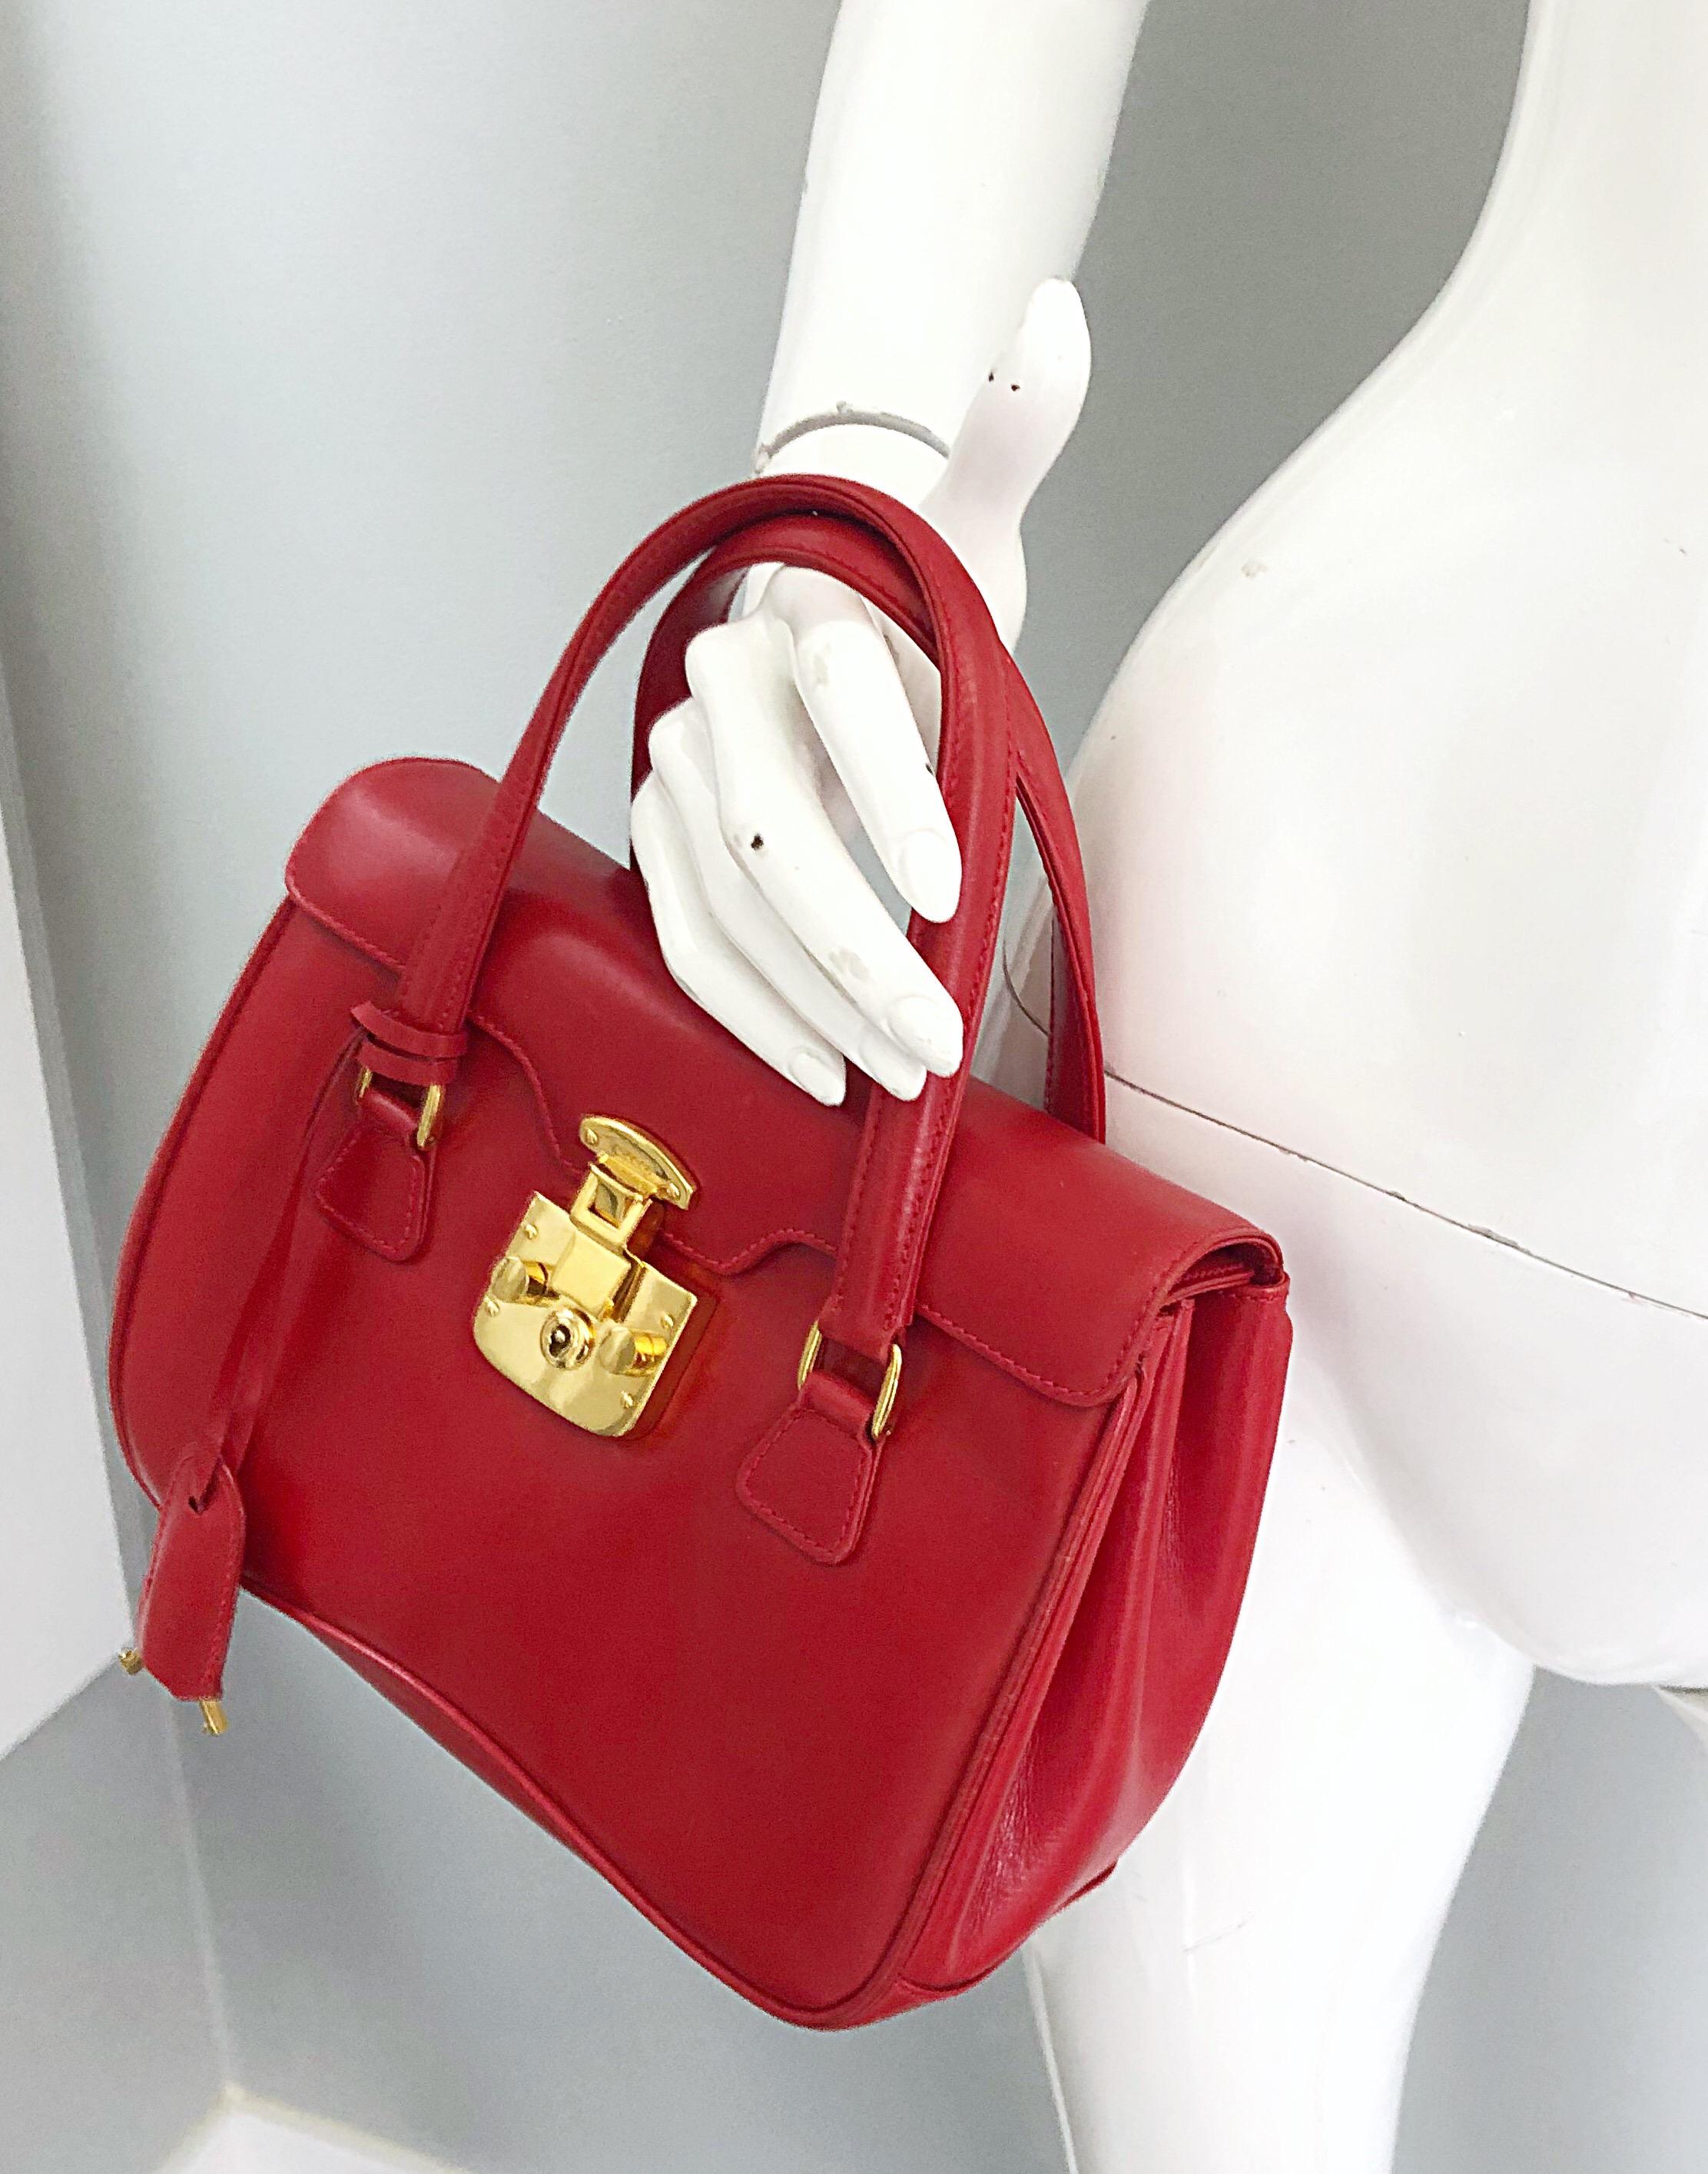 Gucci 1990s Lipstick Red Leather Vintage 90s Purse Handbag Satchel Bag 4